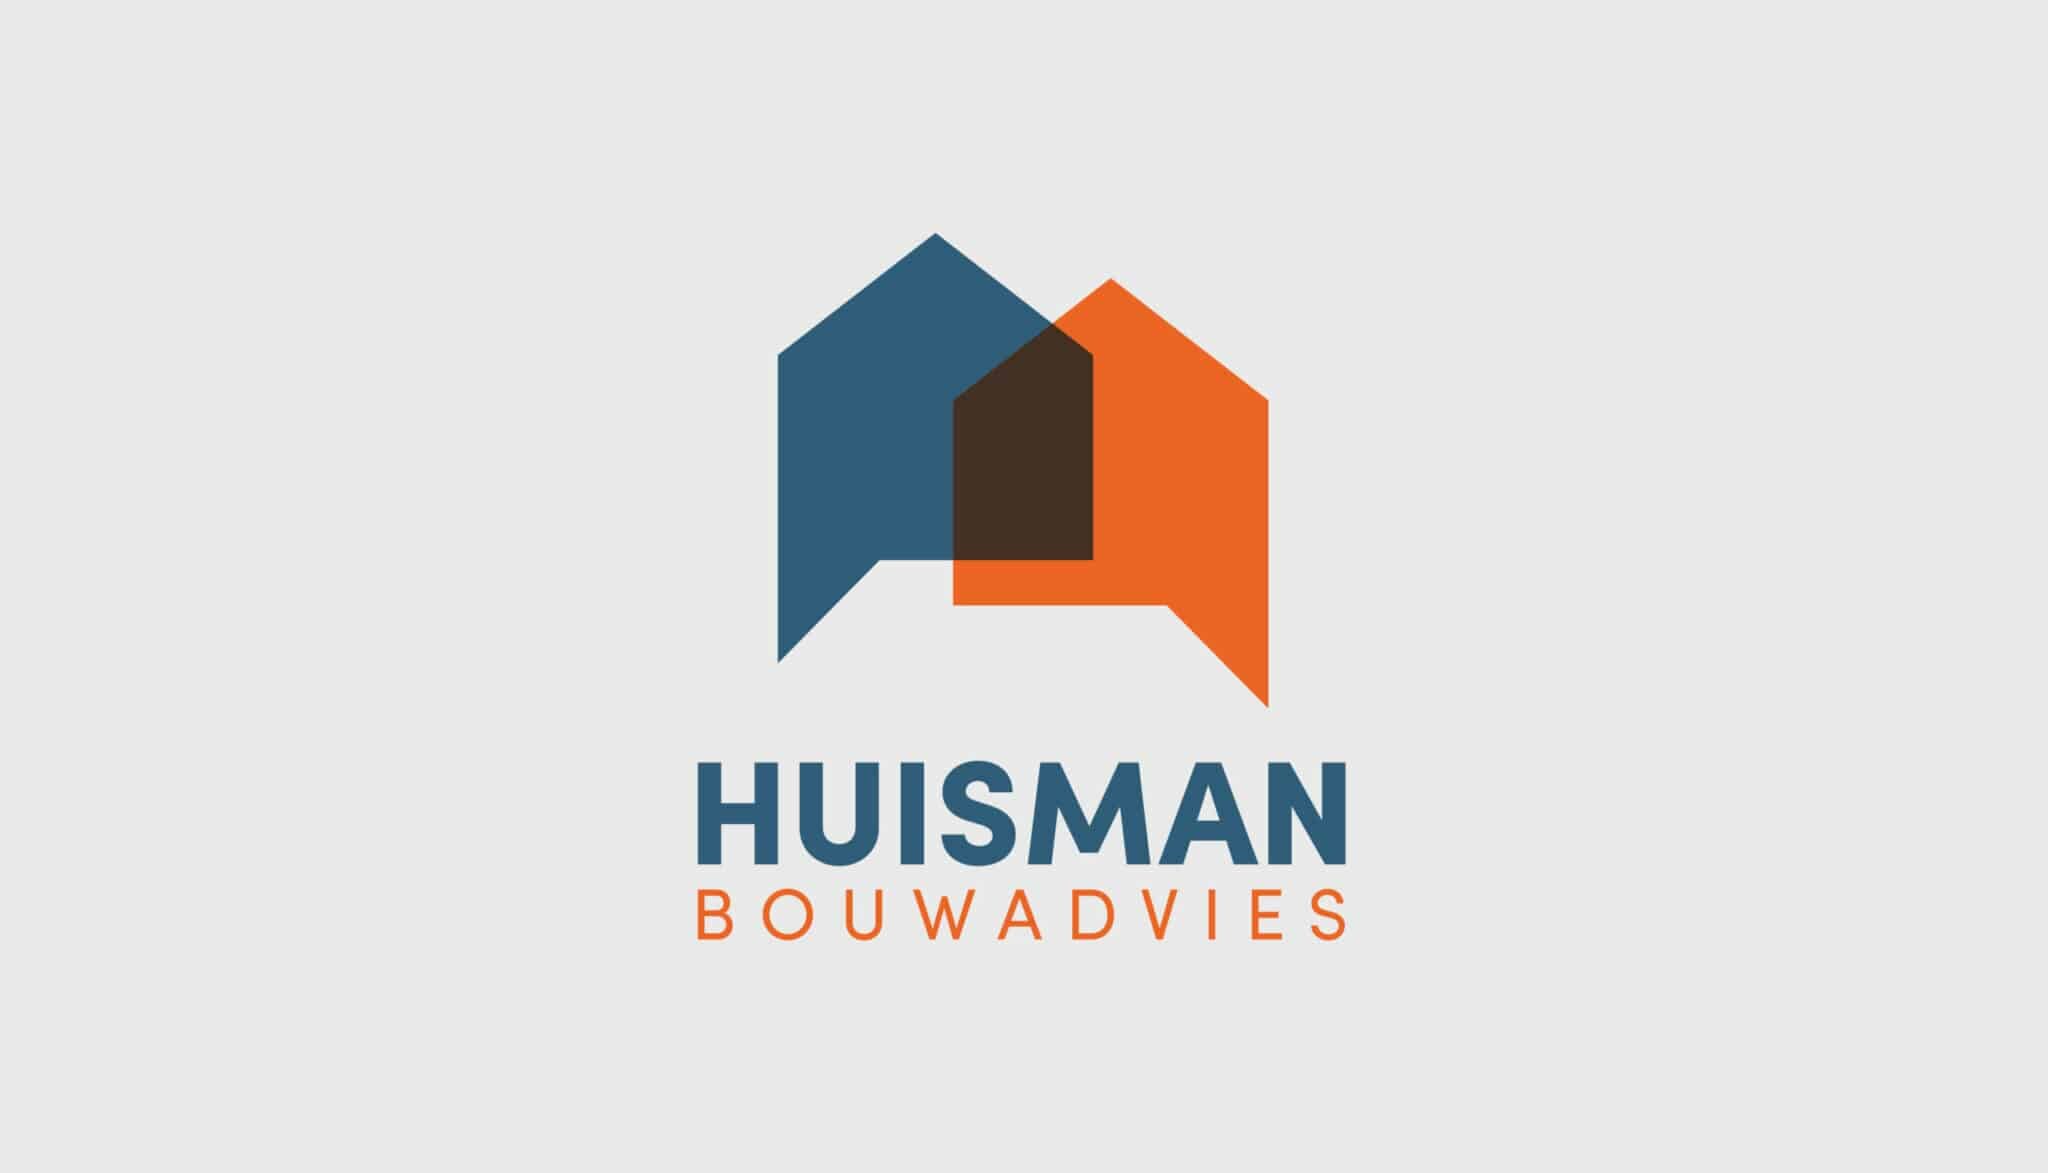 Profilo di HuismanBouwadvies in scala